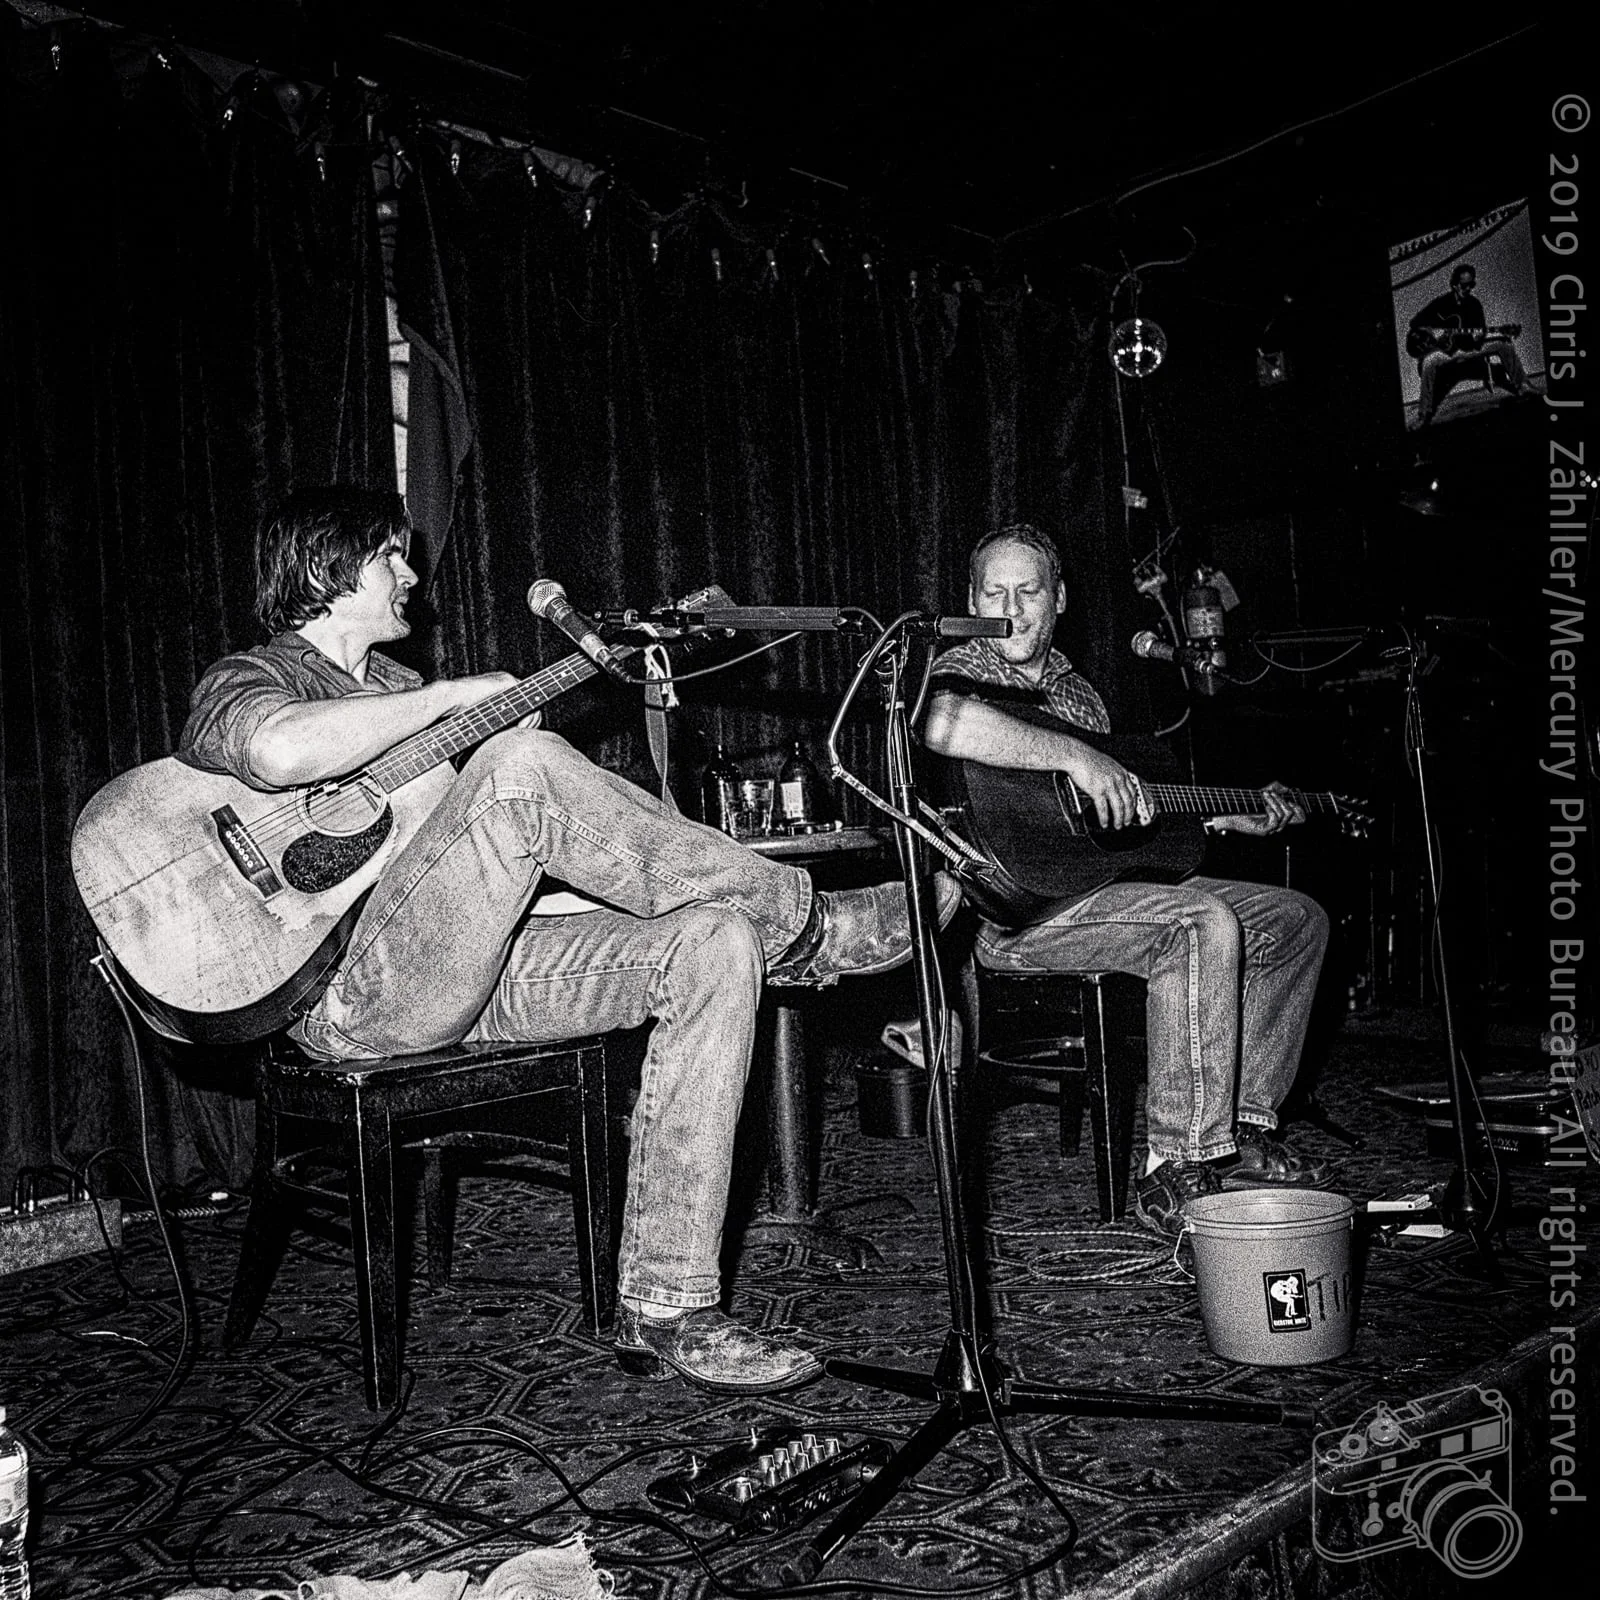 Dan & Brad (II) — Brad Fielder & Dan Martin Song Swap at the Deli